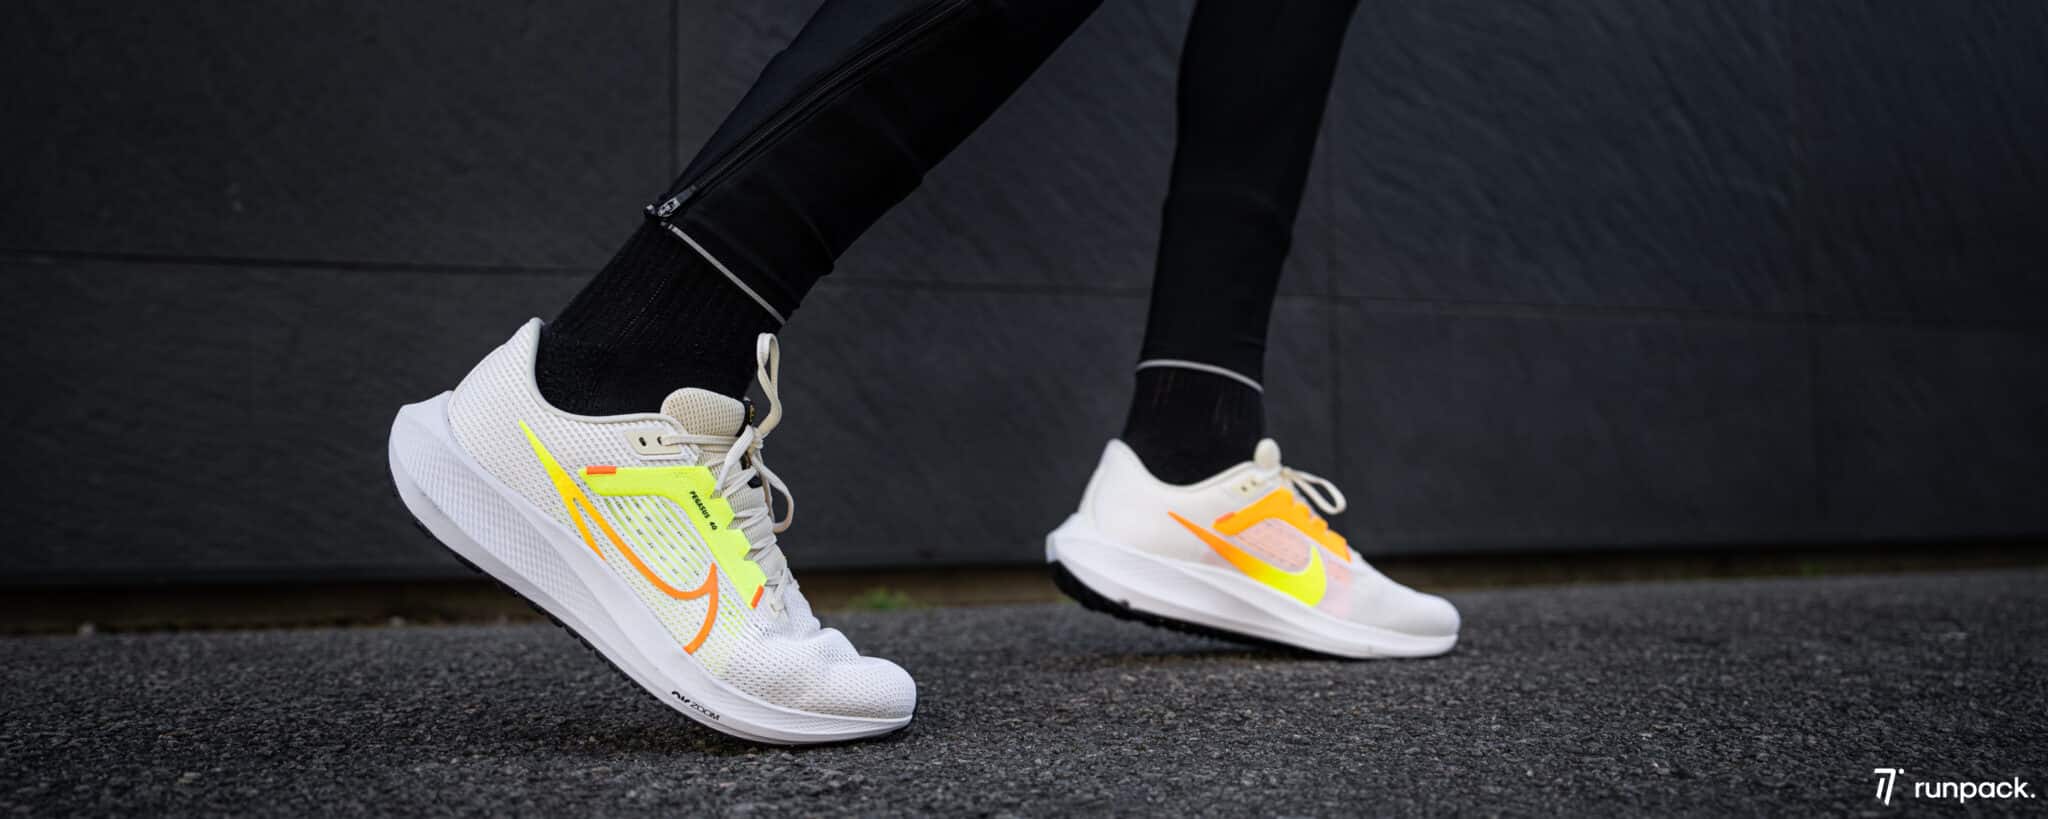 montaje mesa Tentación Nike running : quelle chaussure choisir pour courir ?